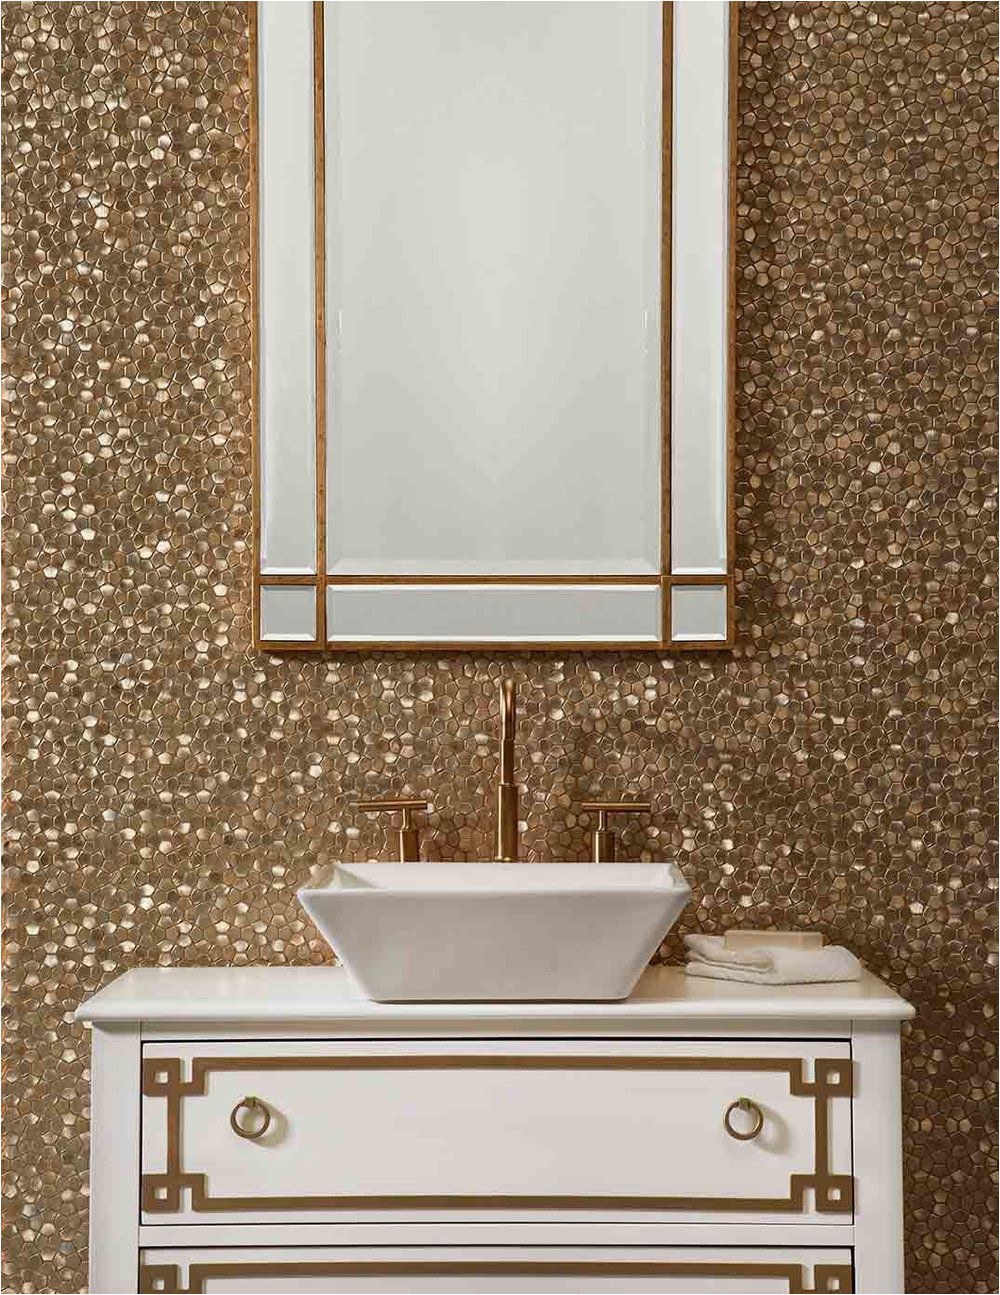 Metallic Gold Bathroom Rugs Glamorous Gold Tiles